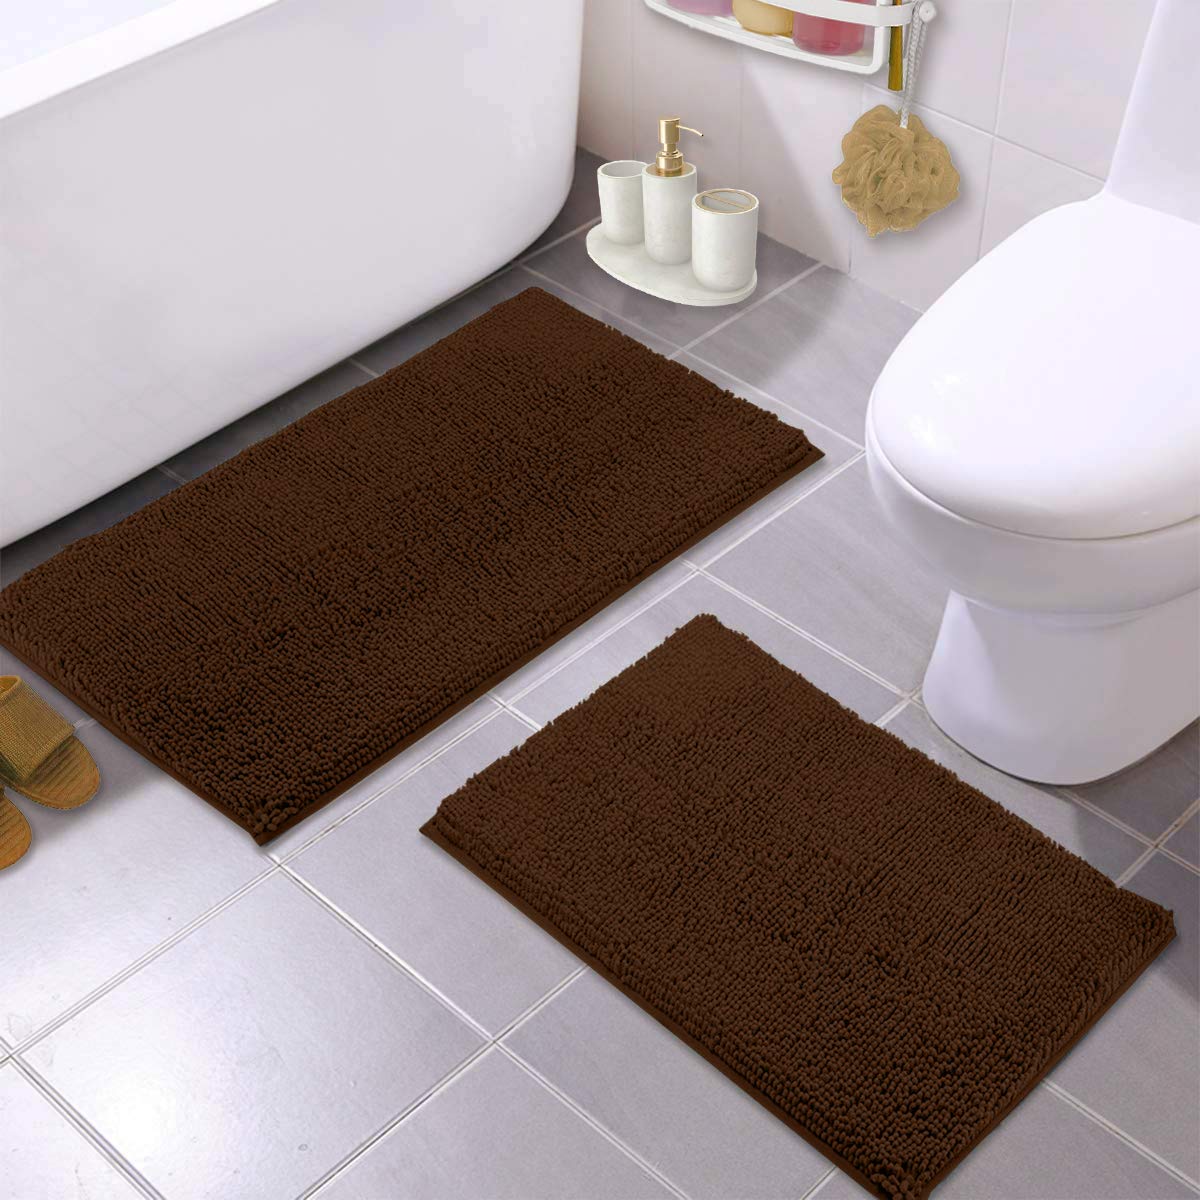 LuxUrux Bathroom Rug Set�Extra-Soft Plush Bath mat Shower Bathroom Rugs,1'' Chenille Microfiber Material, Super Absorbent (30 X 20'' + 23 x 15'', Brown)  - Very Good